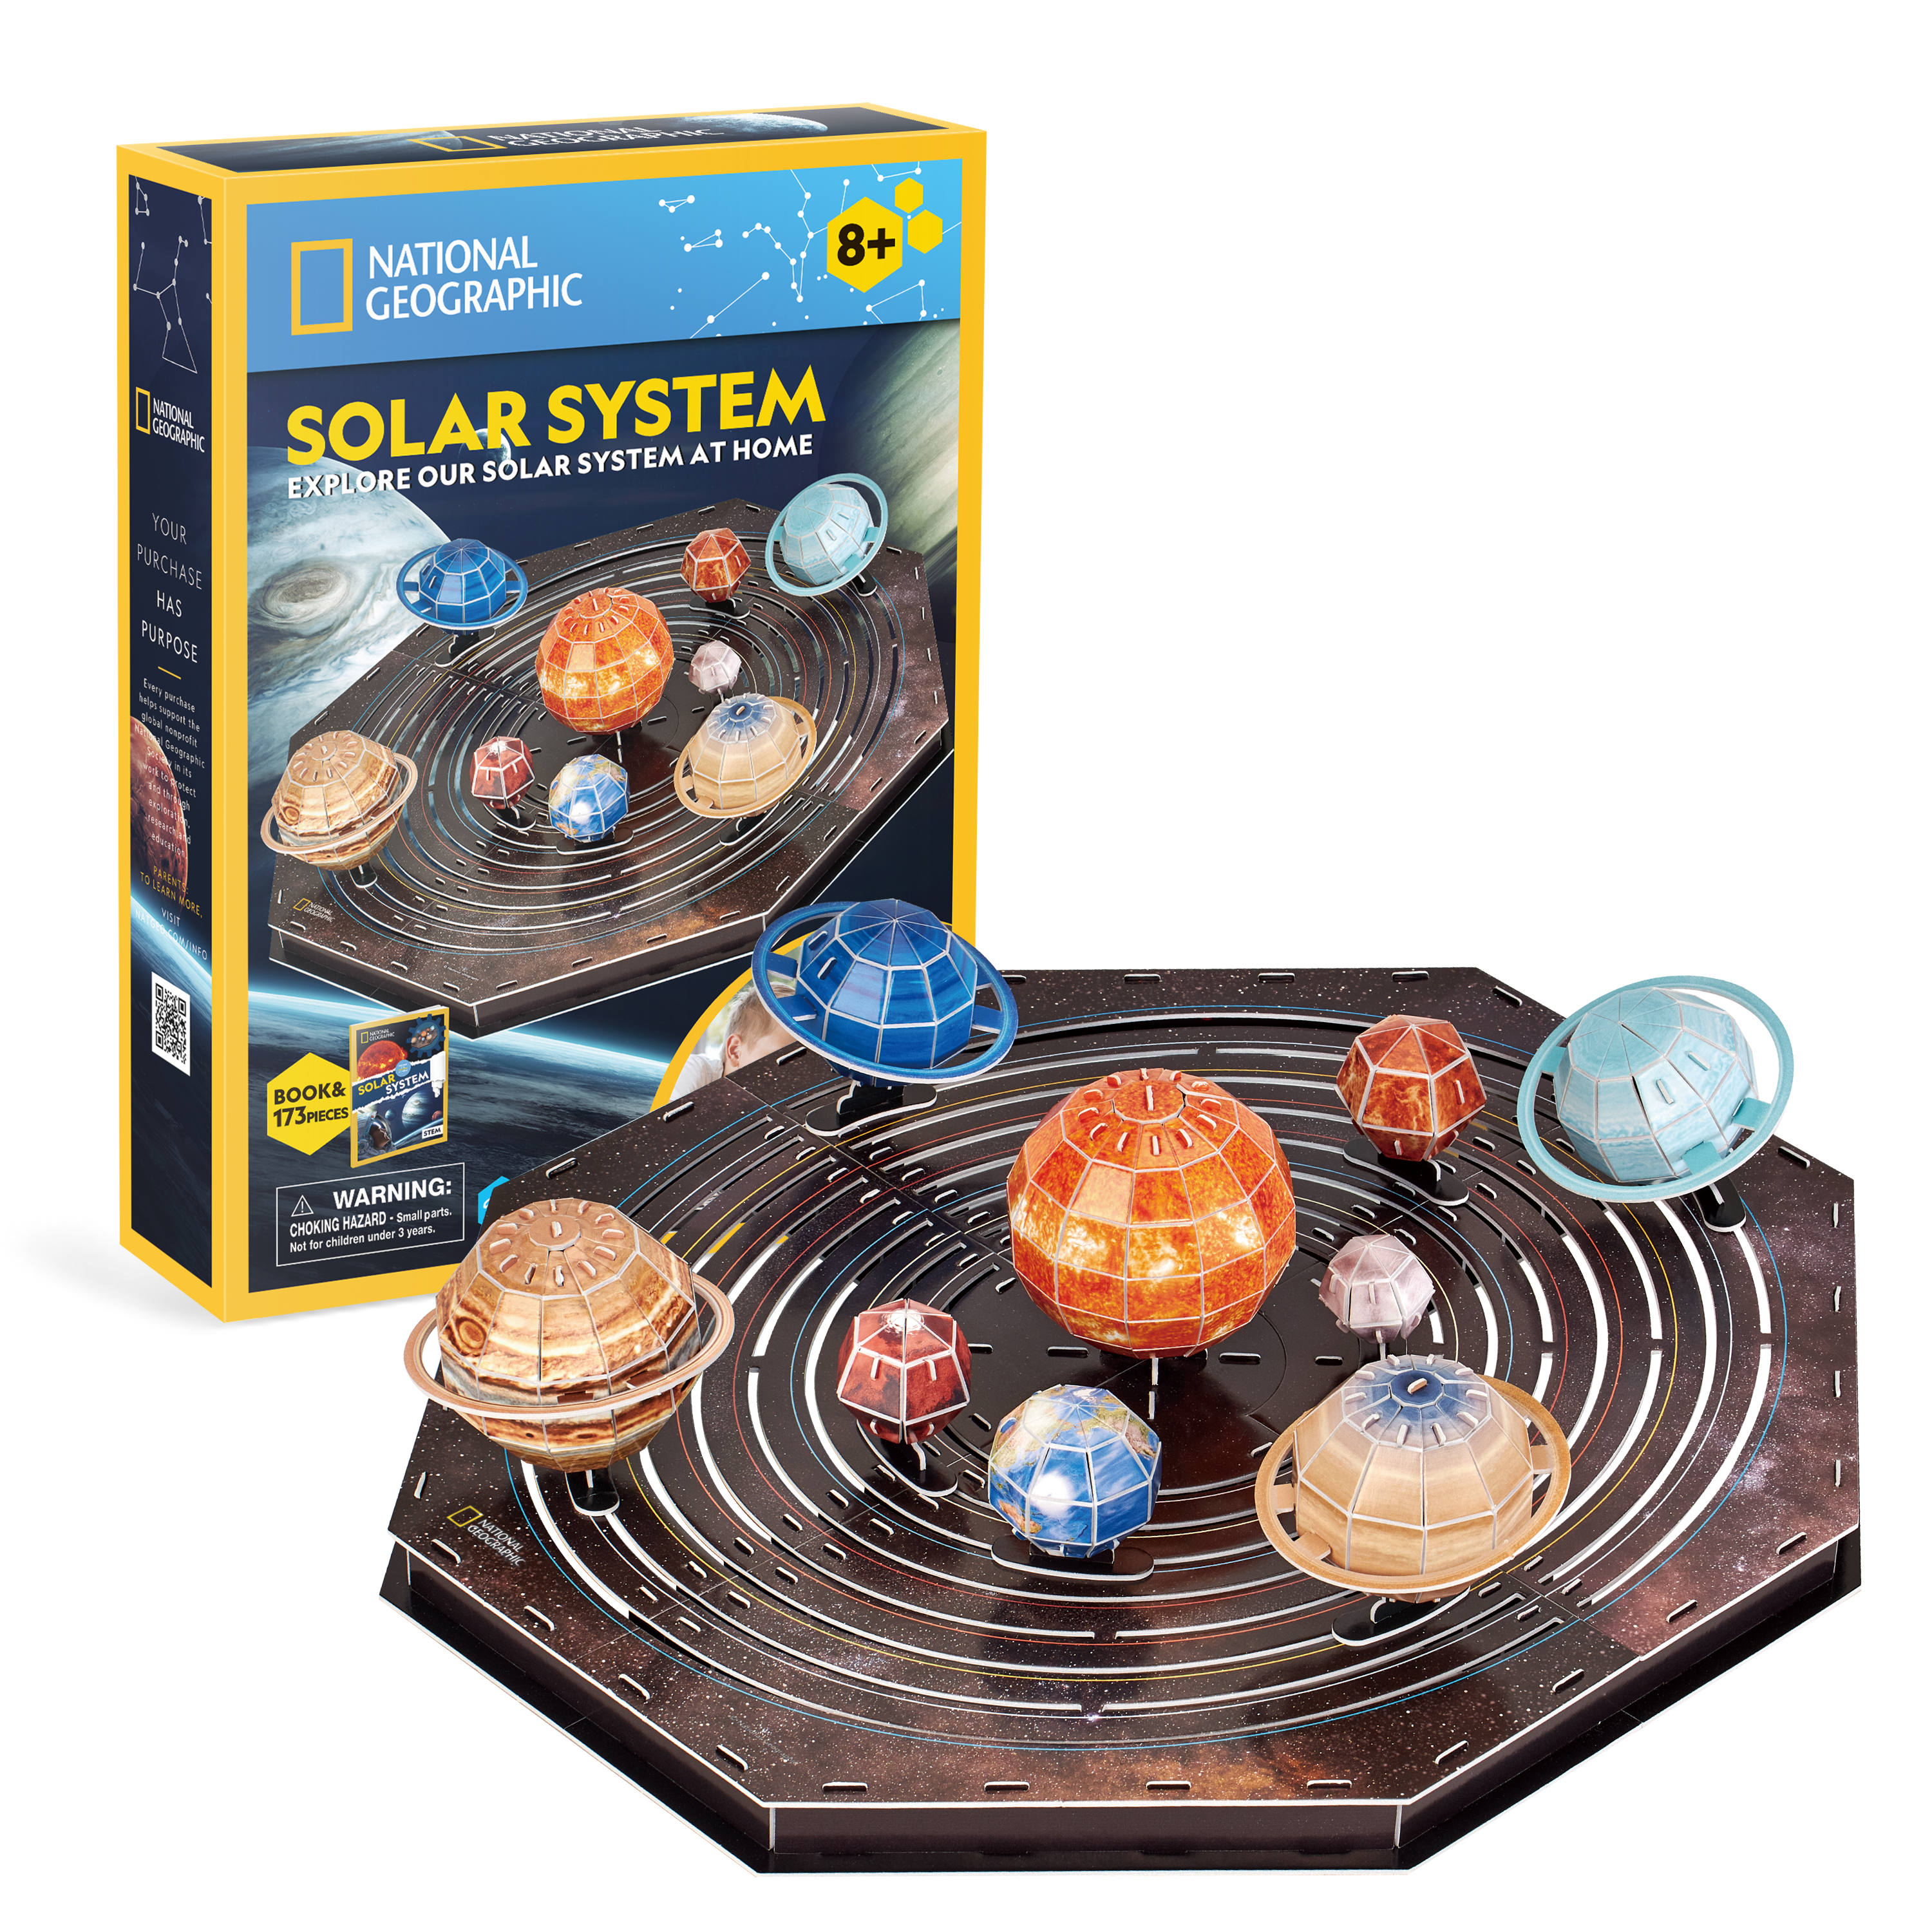 SOLAR SYSTEM 太陽系